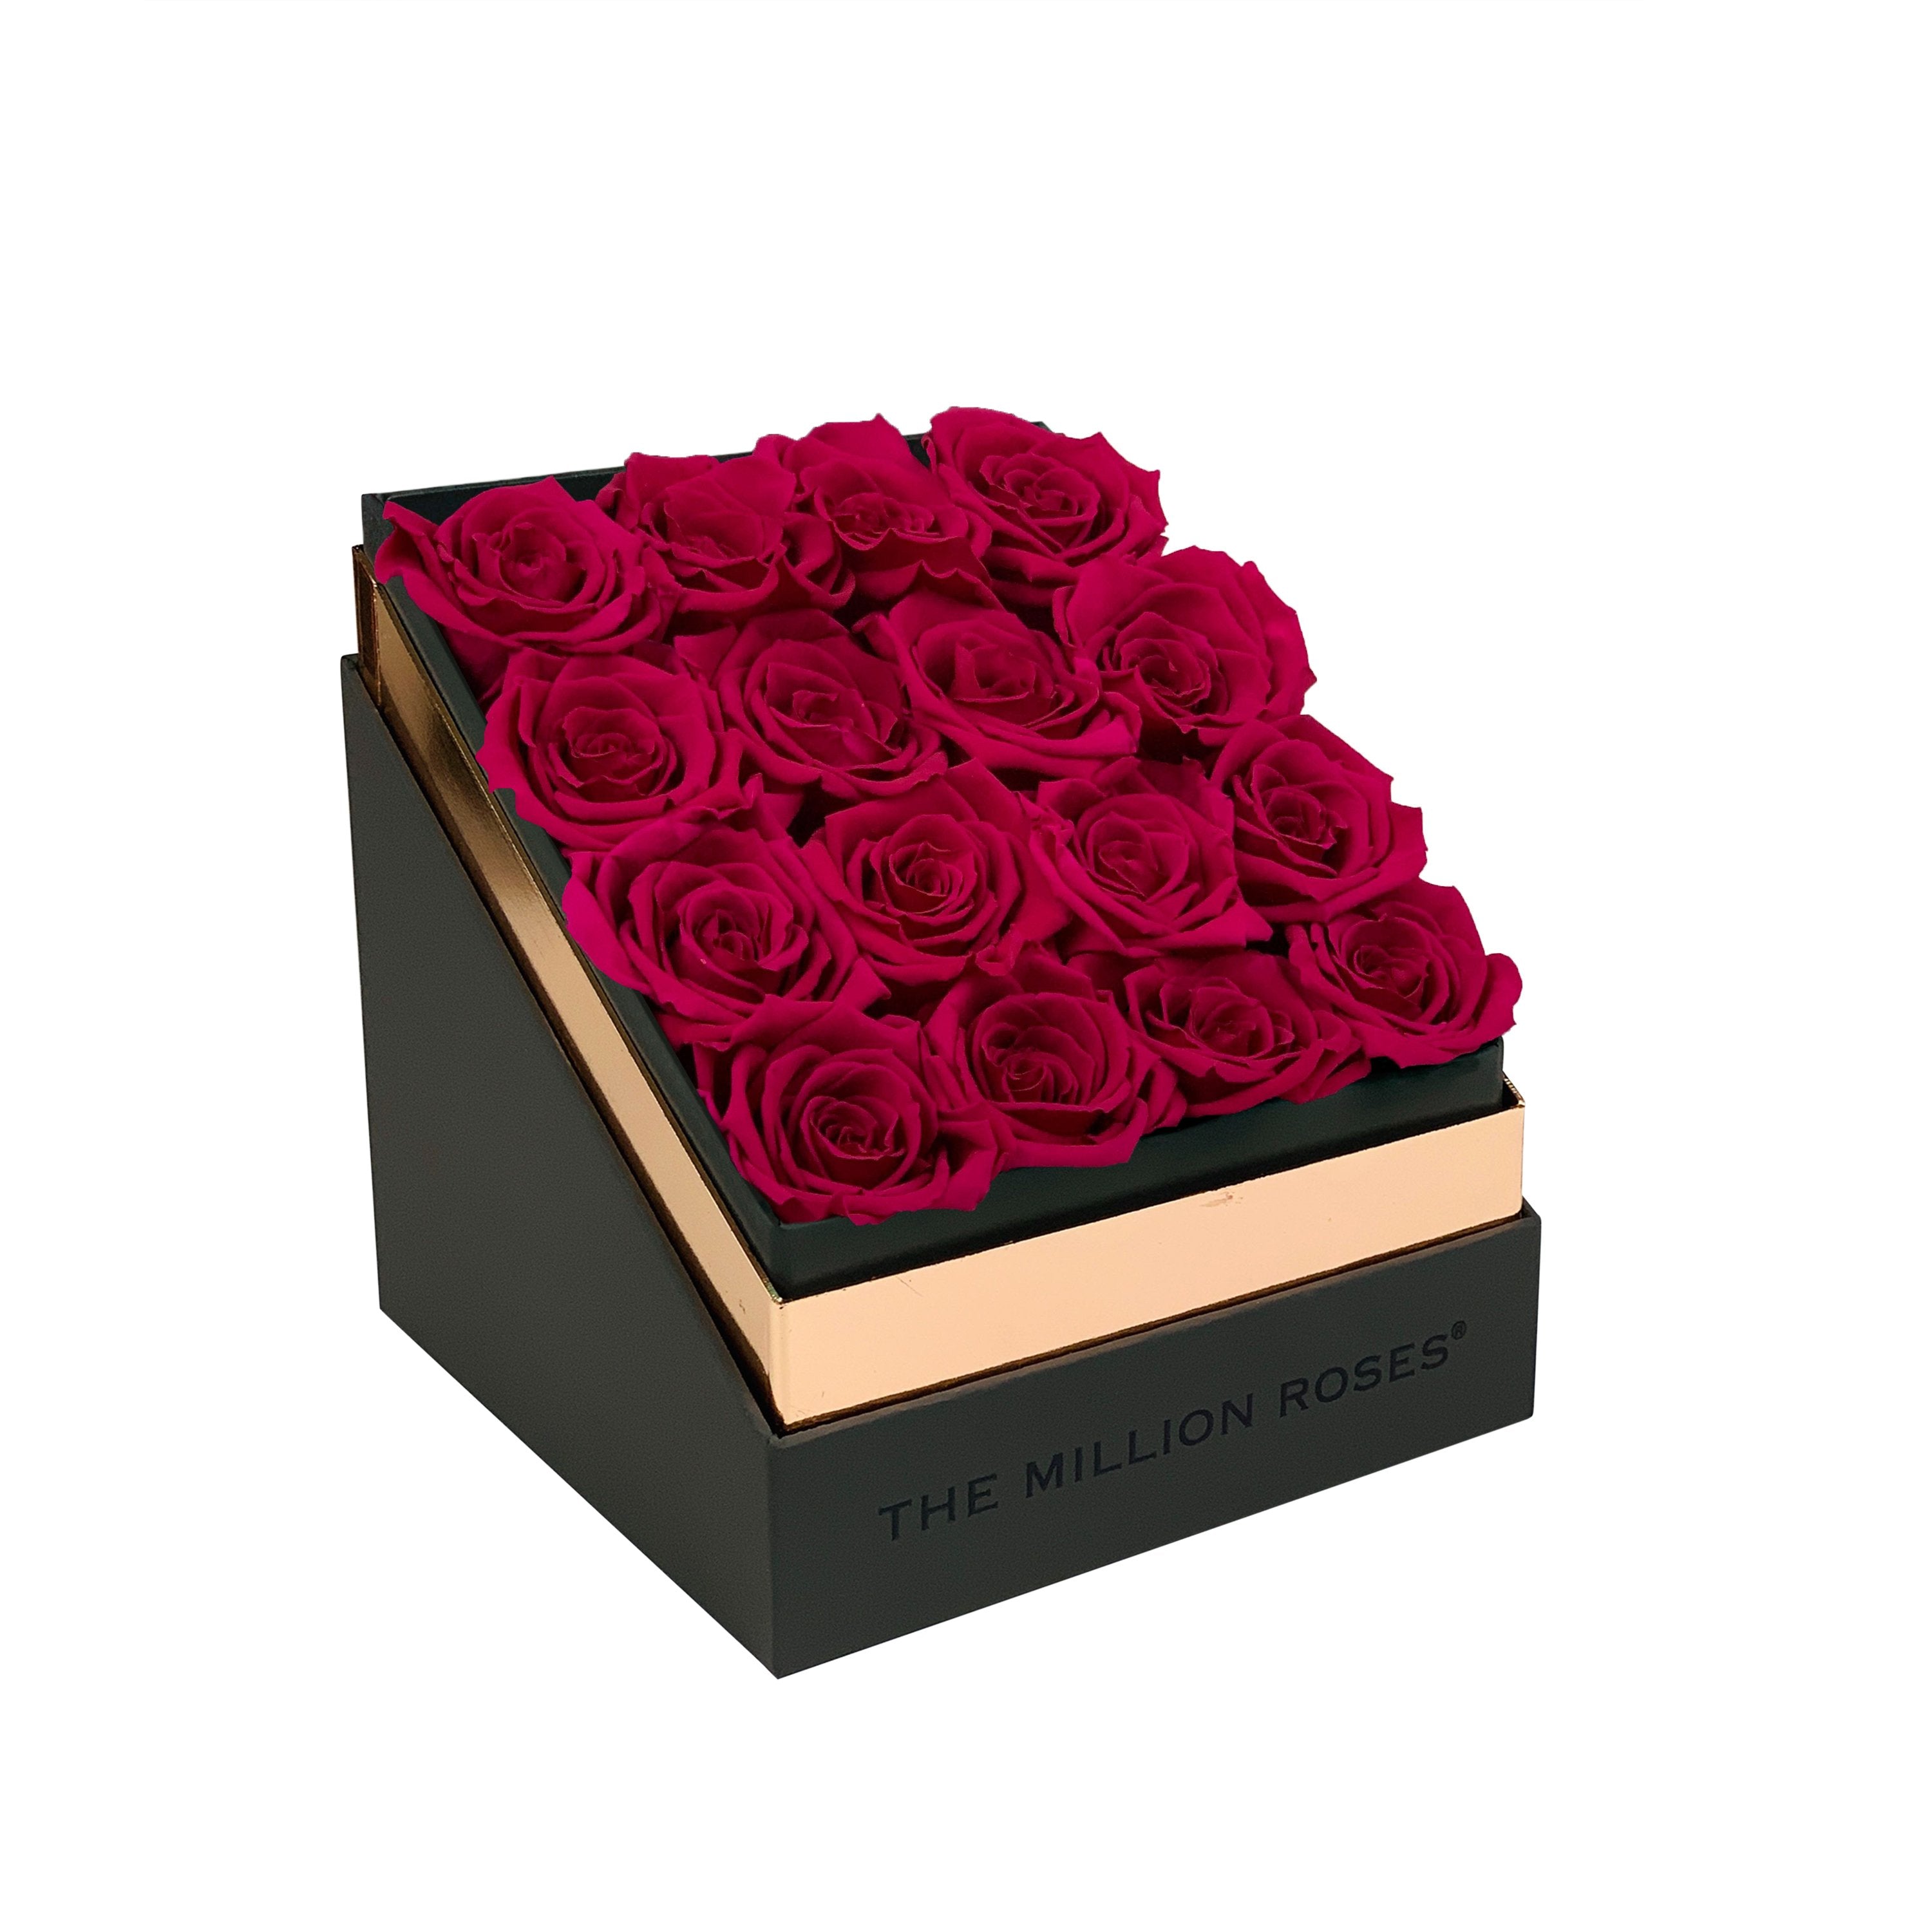 The Square - Gray Box - Magenta Roses